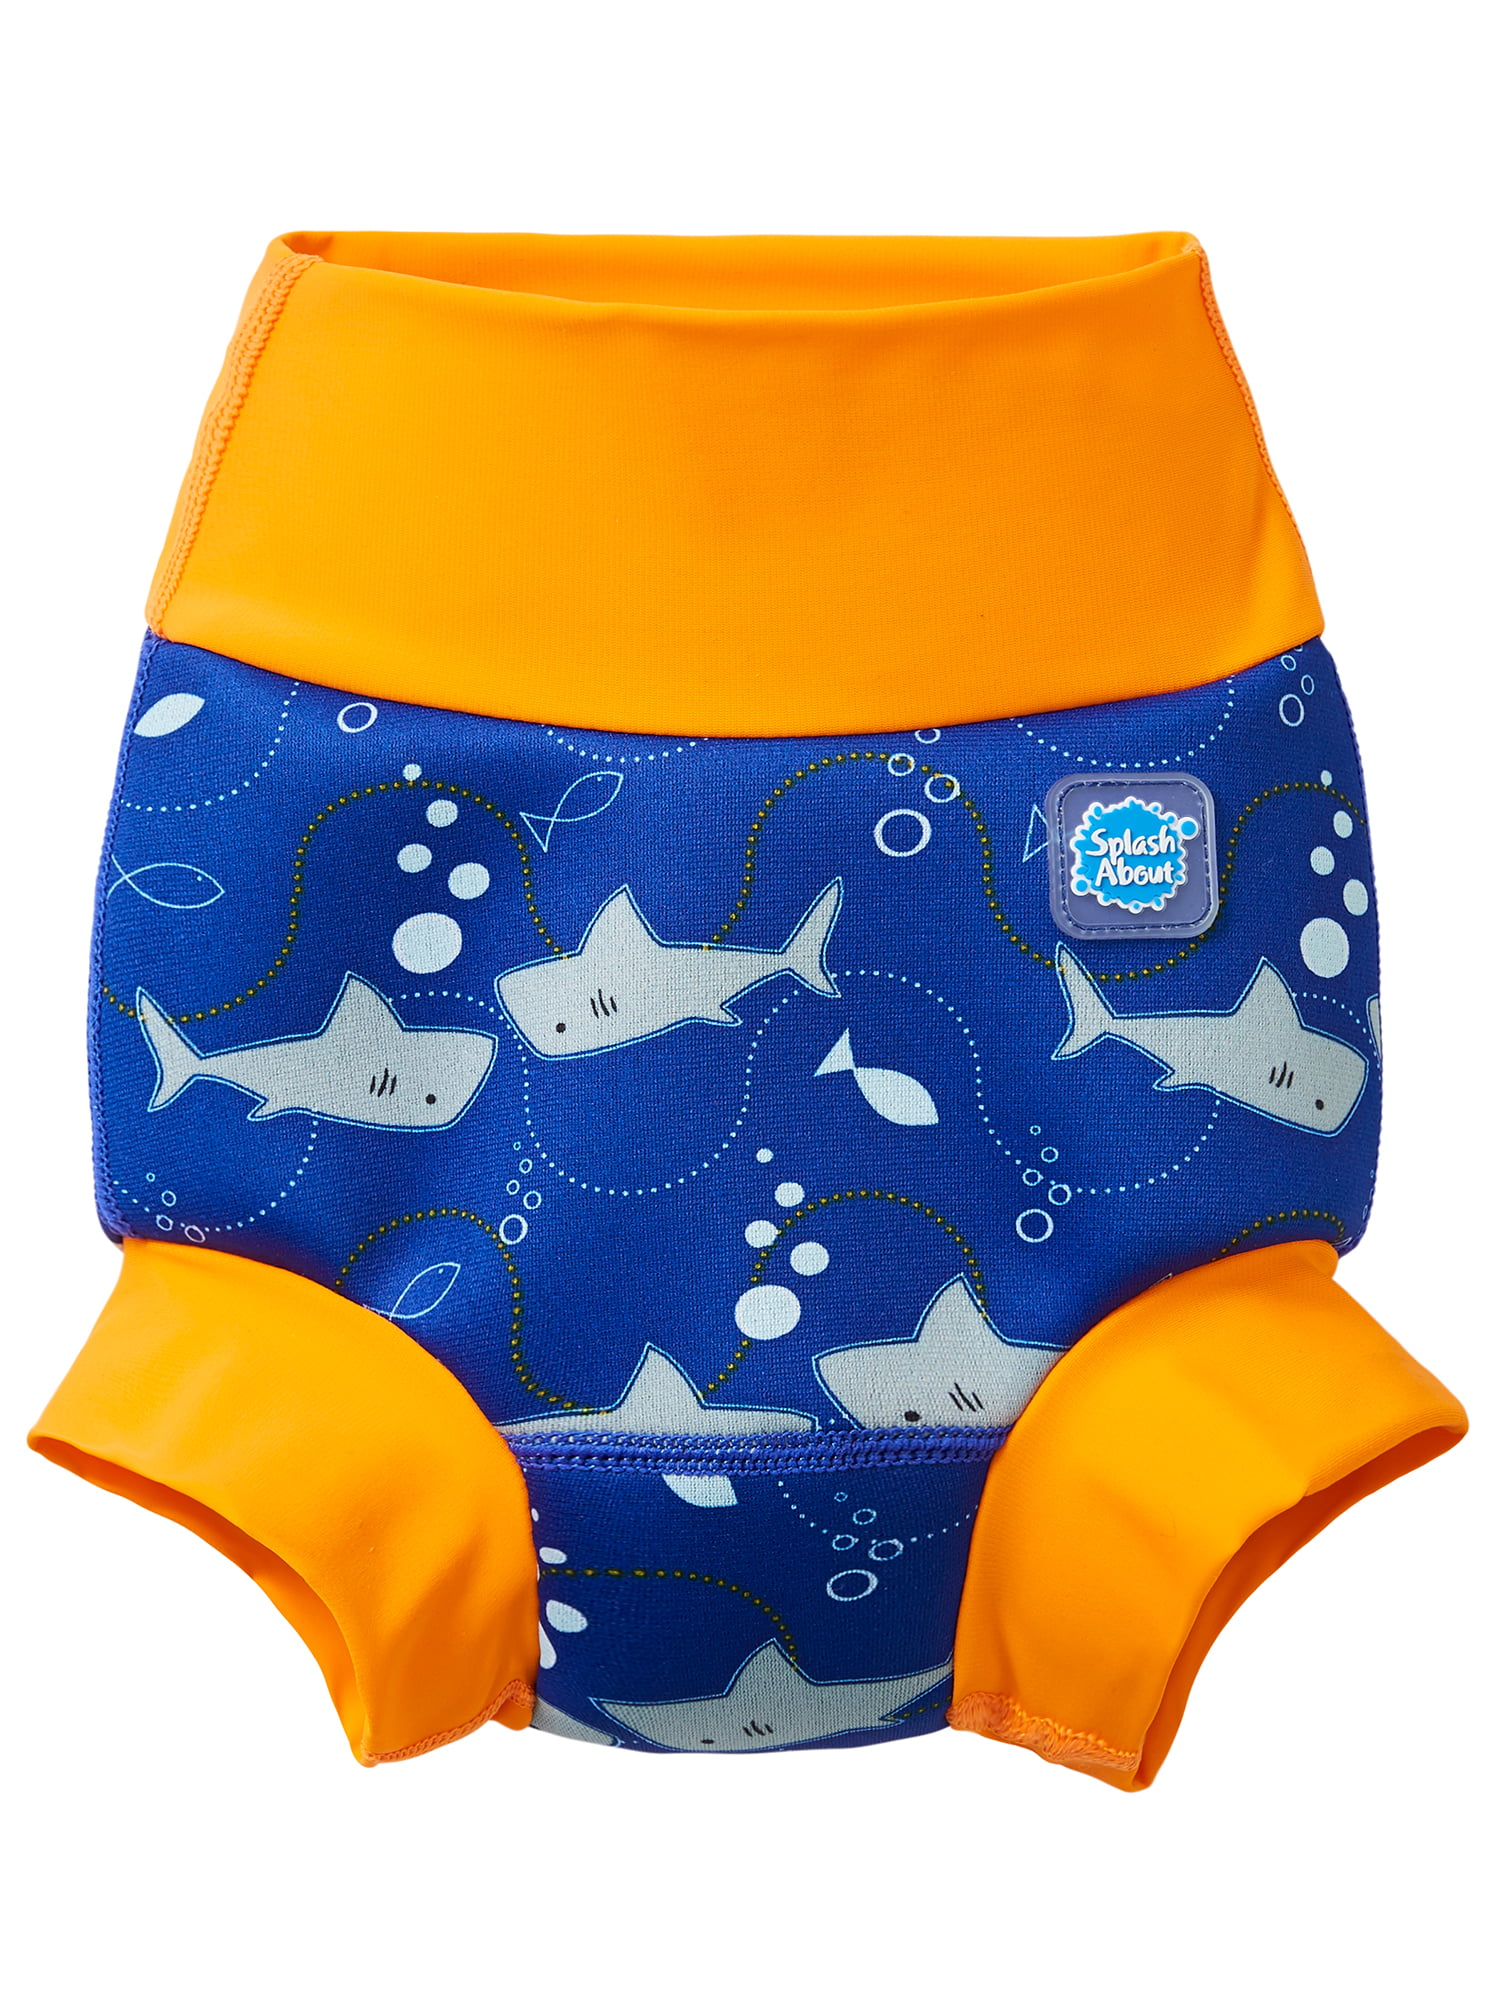 Splash About Happy Nappy Swim Diaper 